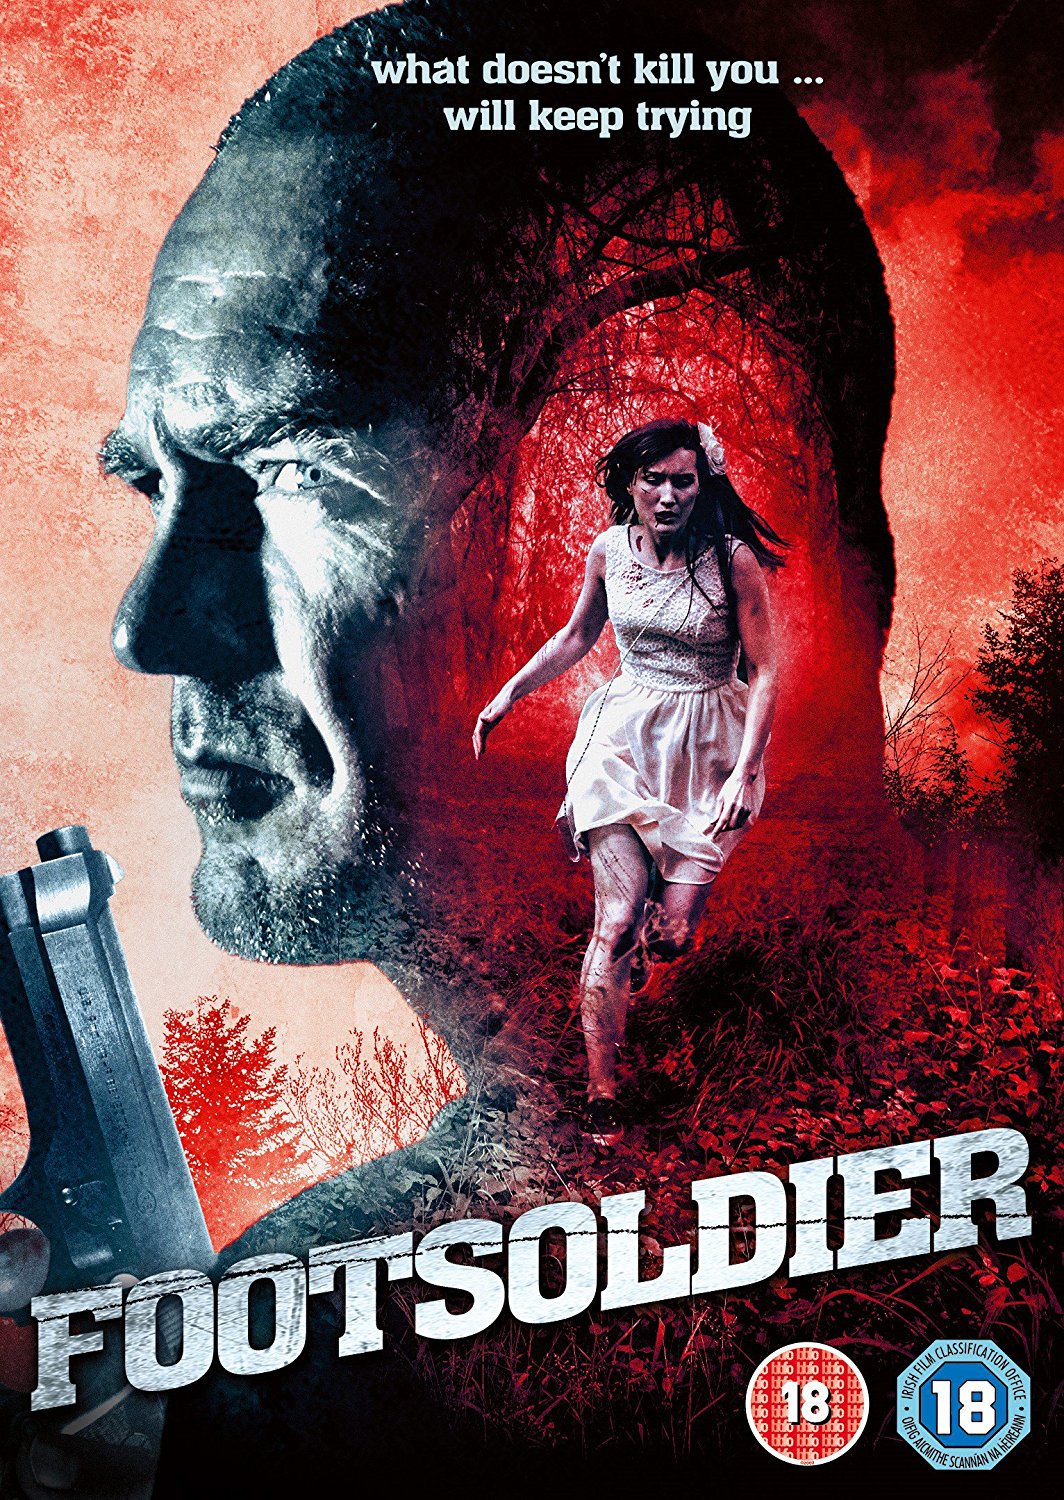 Footsoldier (DVD)